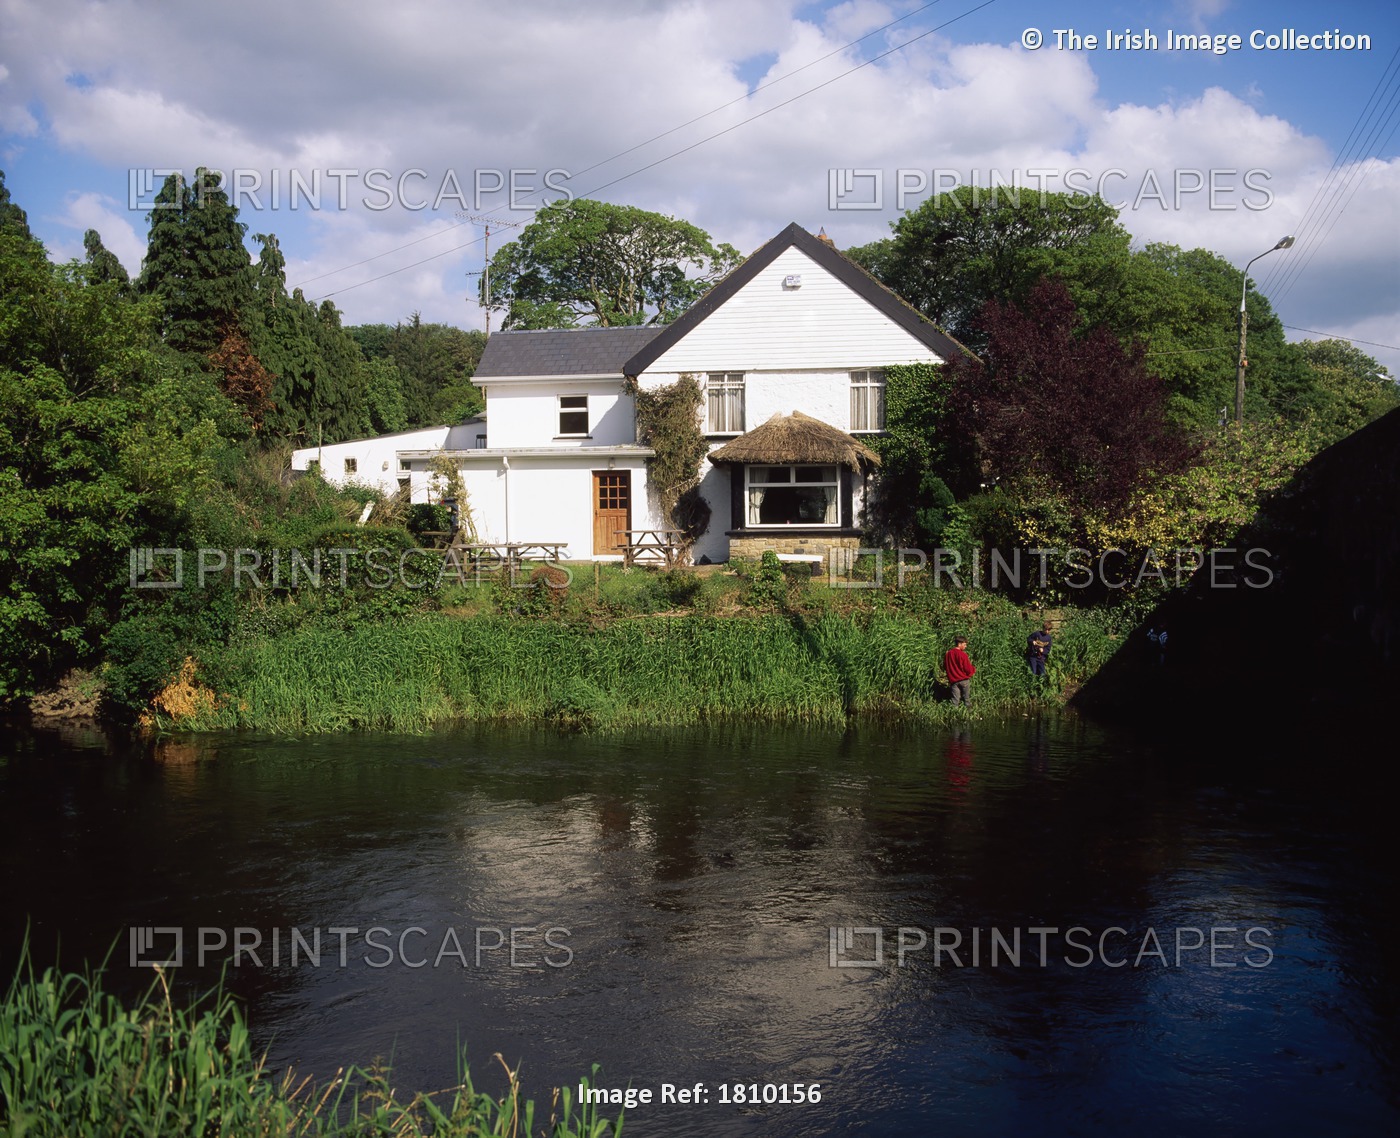 Derragarra Inn, Butlersbridge, Co Cavan, Ireland; People Near An Inn